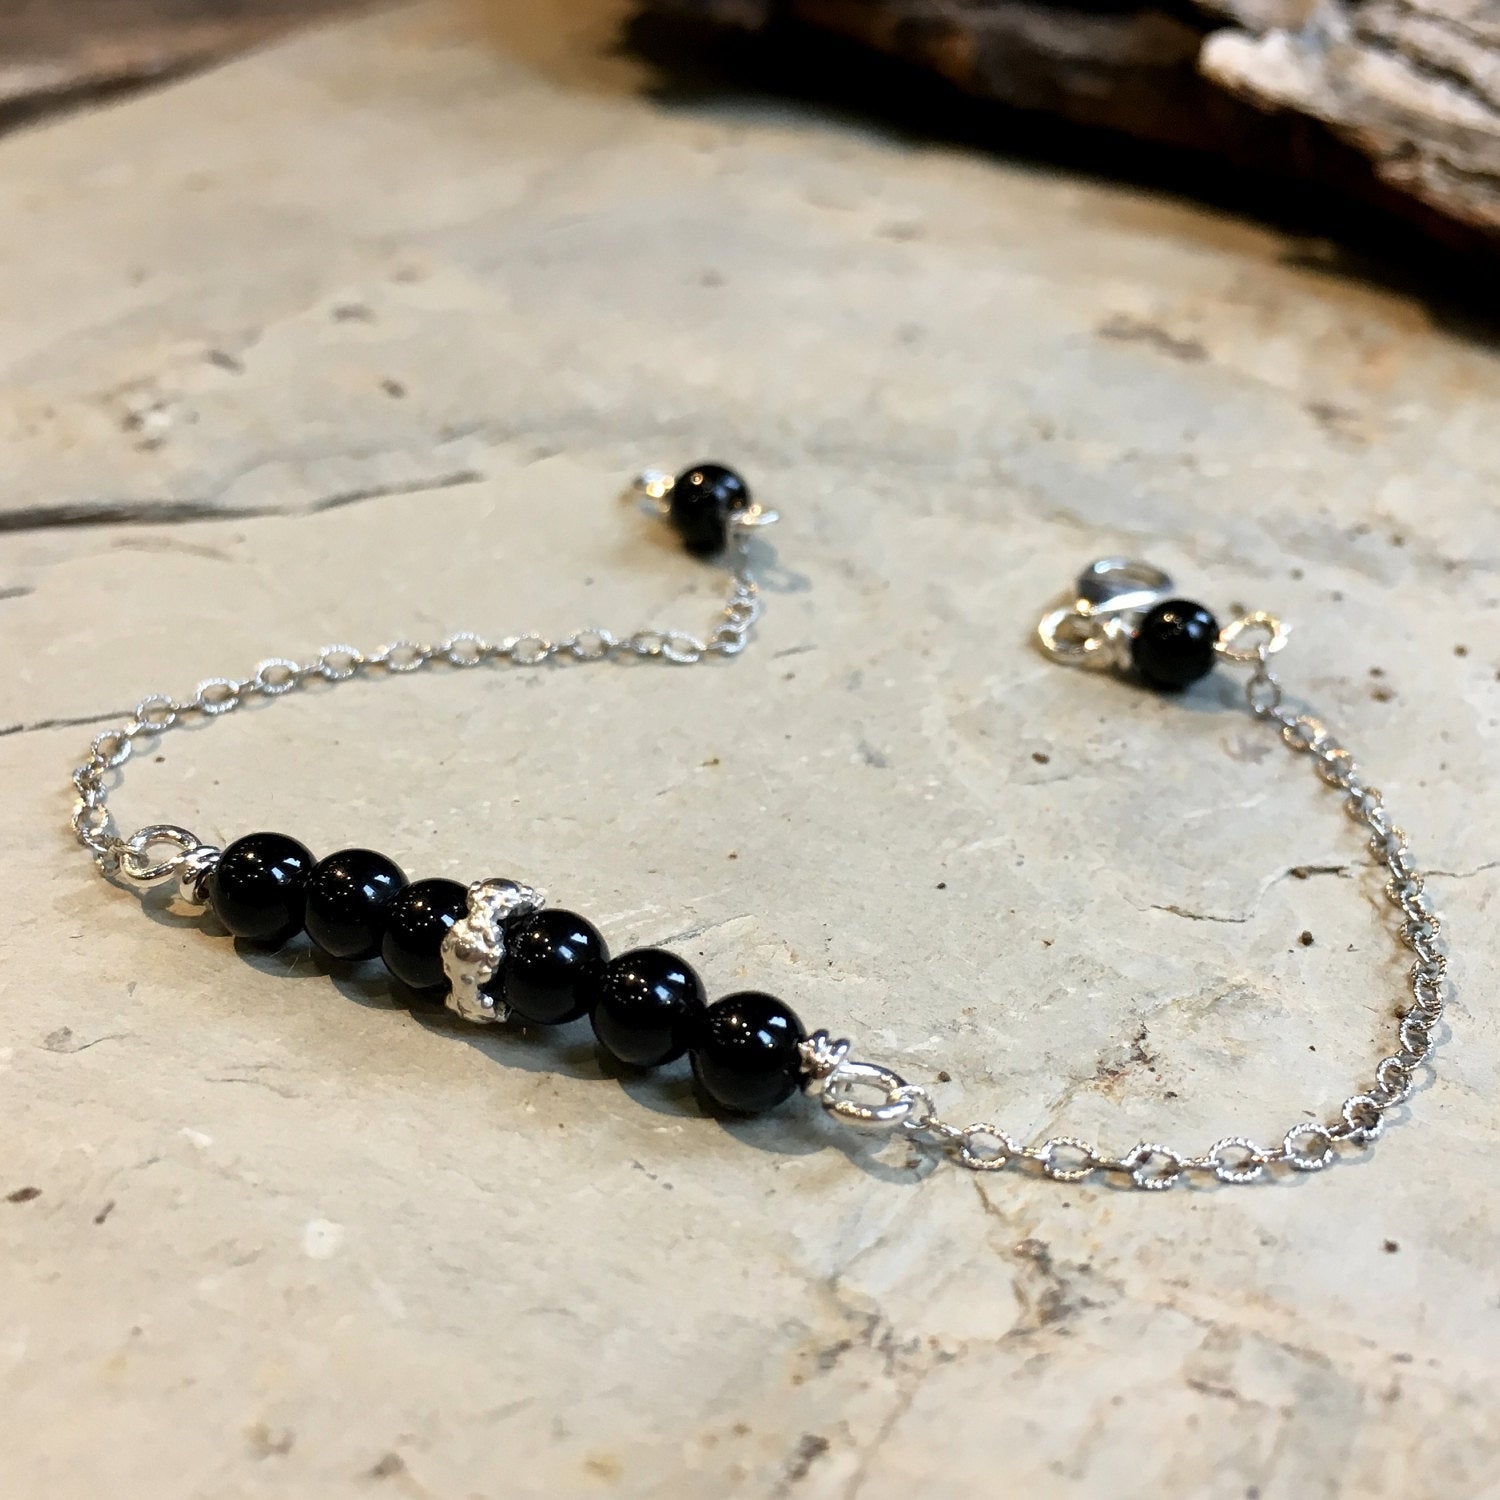 Onyx beads bracelet, Minimalist bracelet, Chain onyx bracelet, sterling silver bracelet, Layering bracelet, silver chain - Forevermore B3018